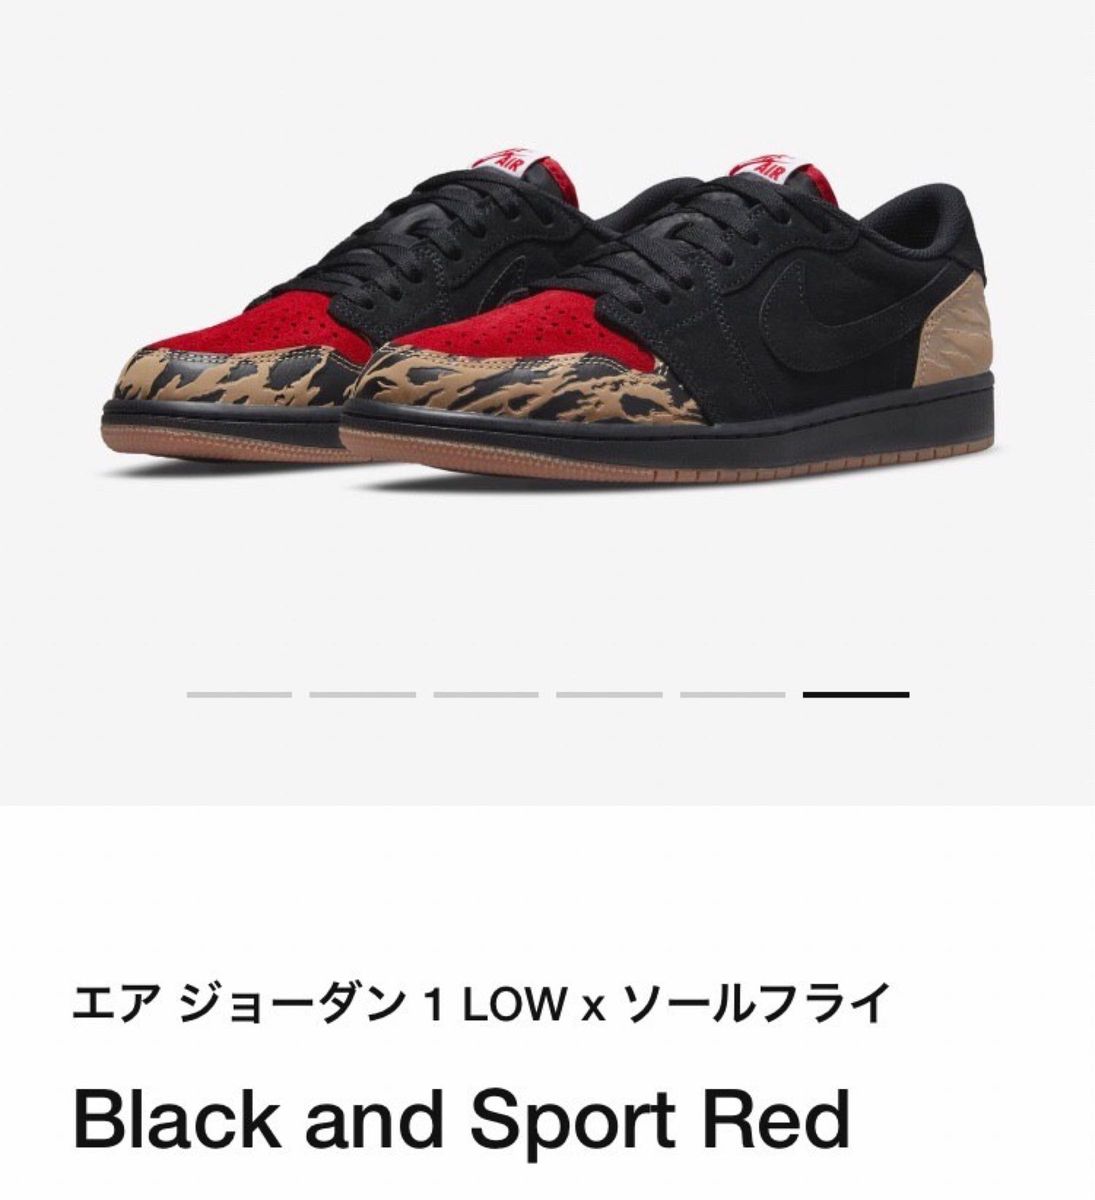 Nike Air Jordan 1 low Black and sport red soleflyナイキ エア